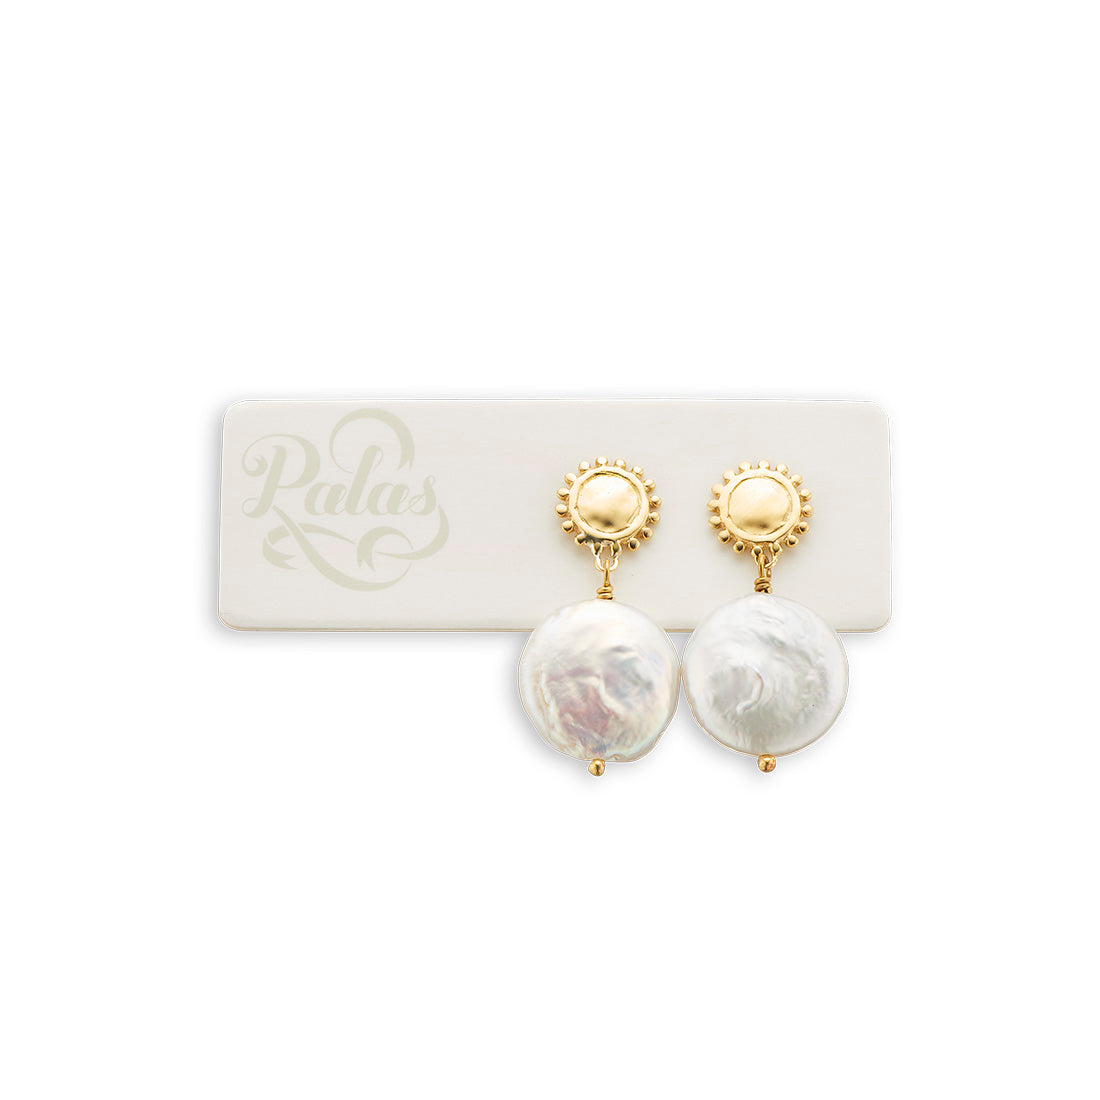 Golden sun and moon pearl earrings